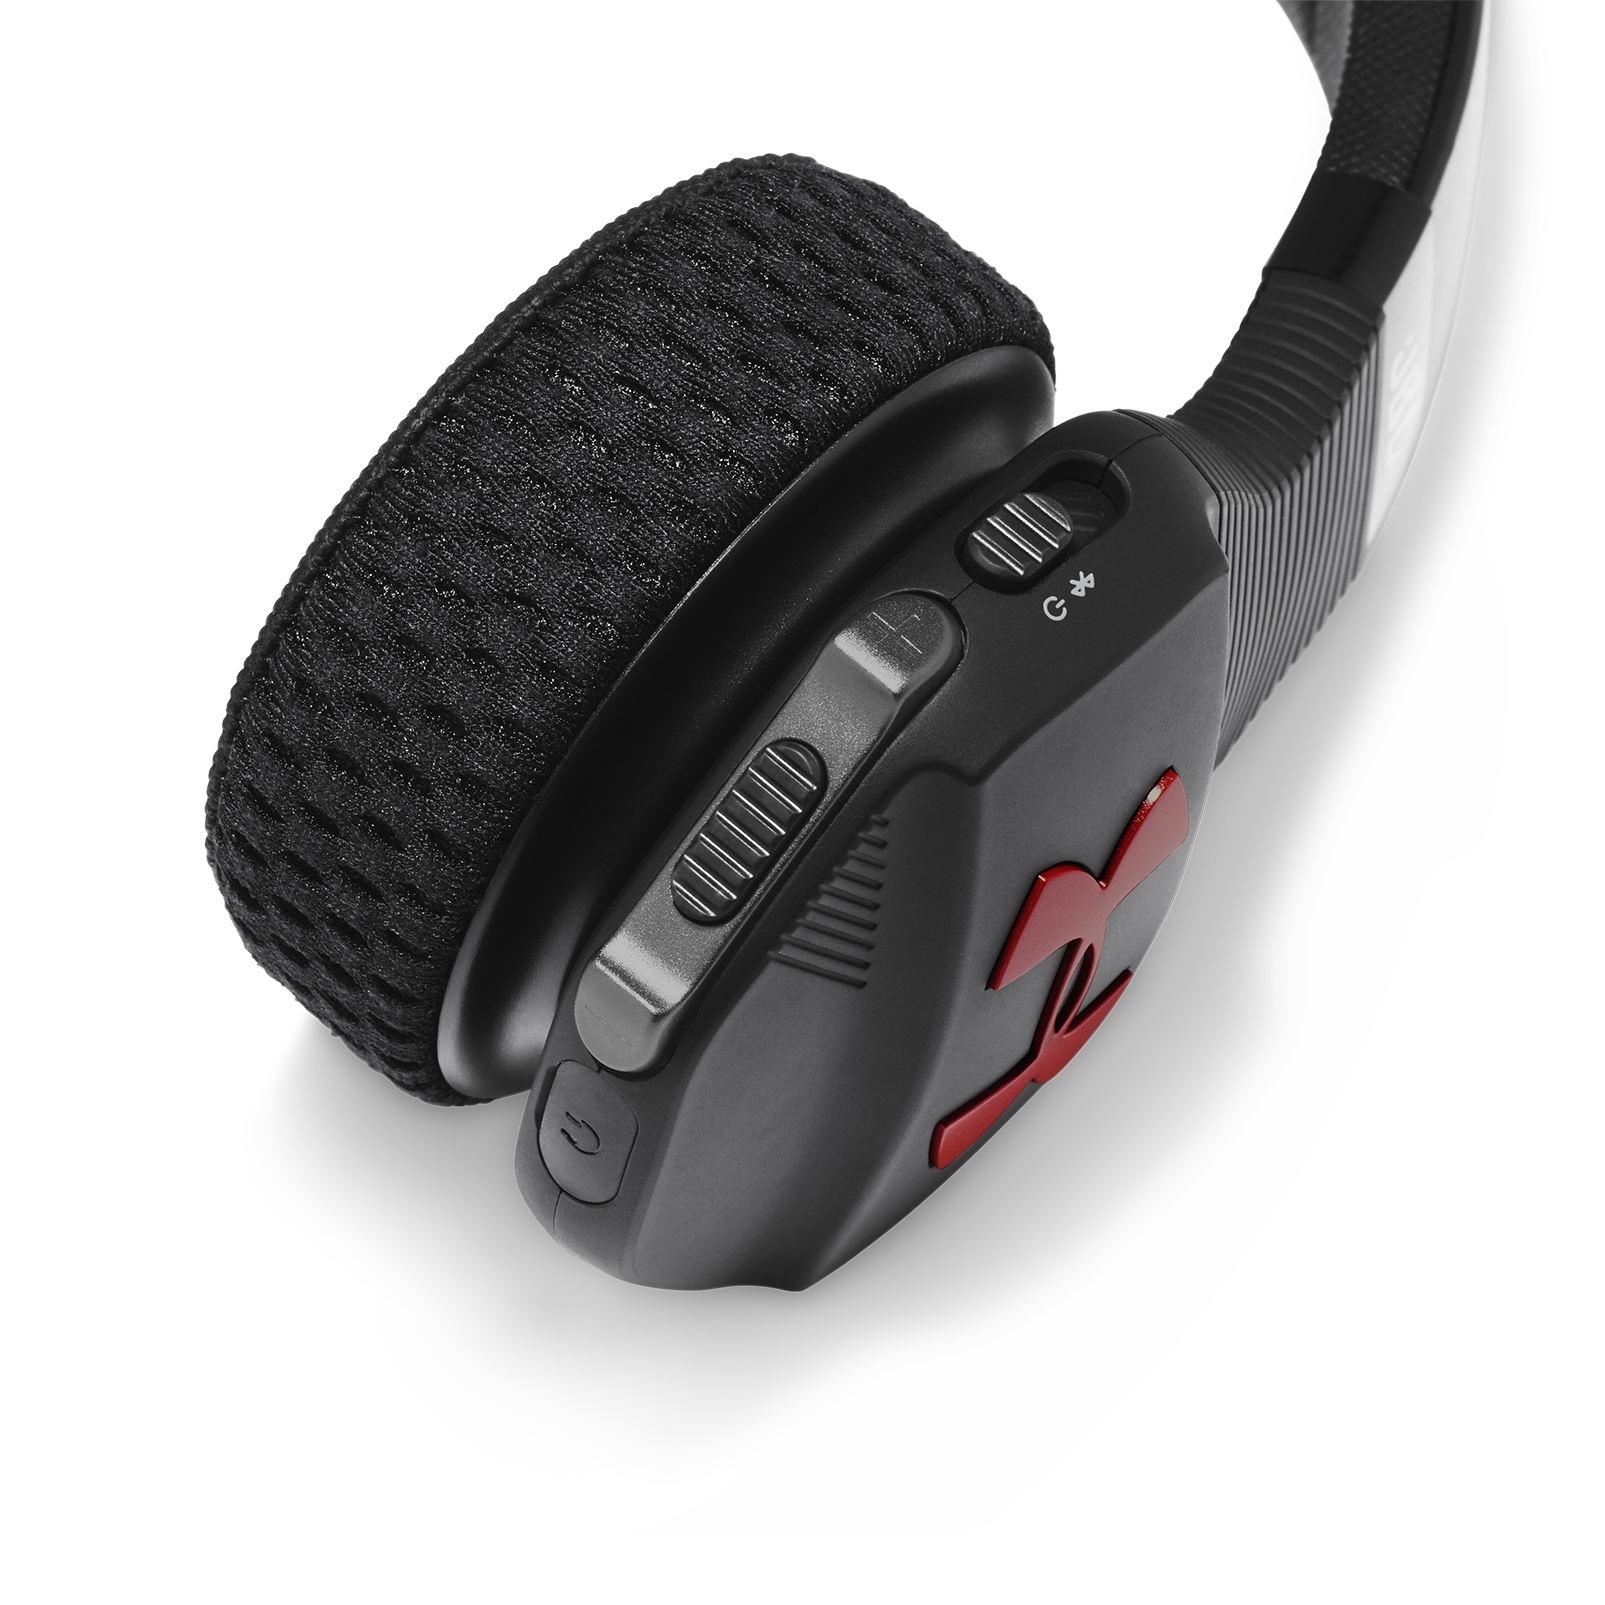 UA Sport Wireless Train – Engineered by JBL - Black / Red - Wireless on-ear headphone built for the gym - Detailshot 3